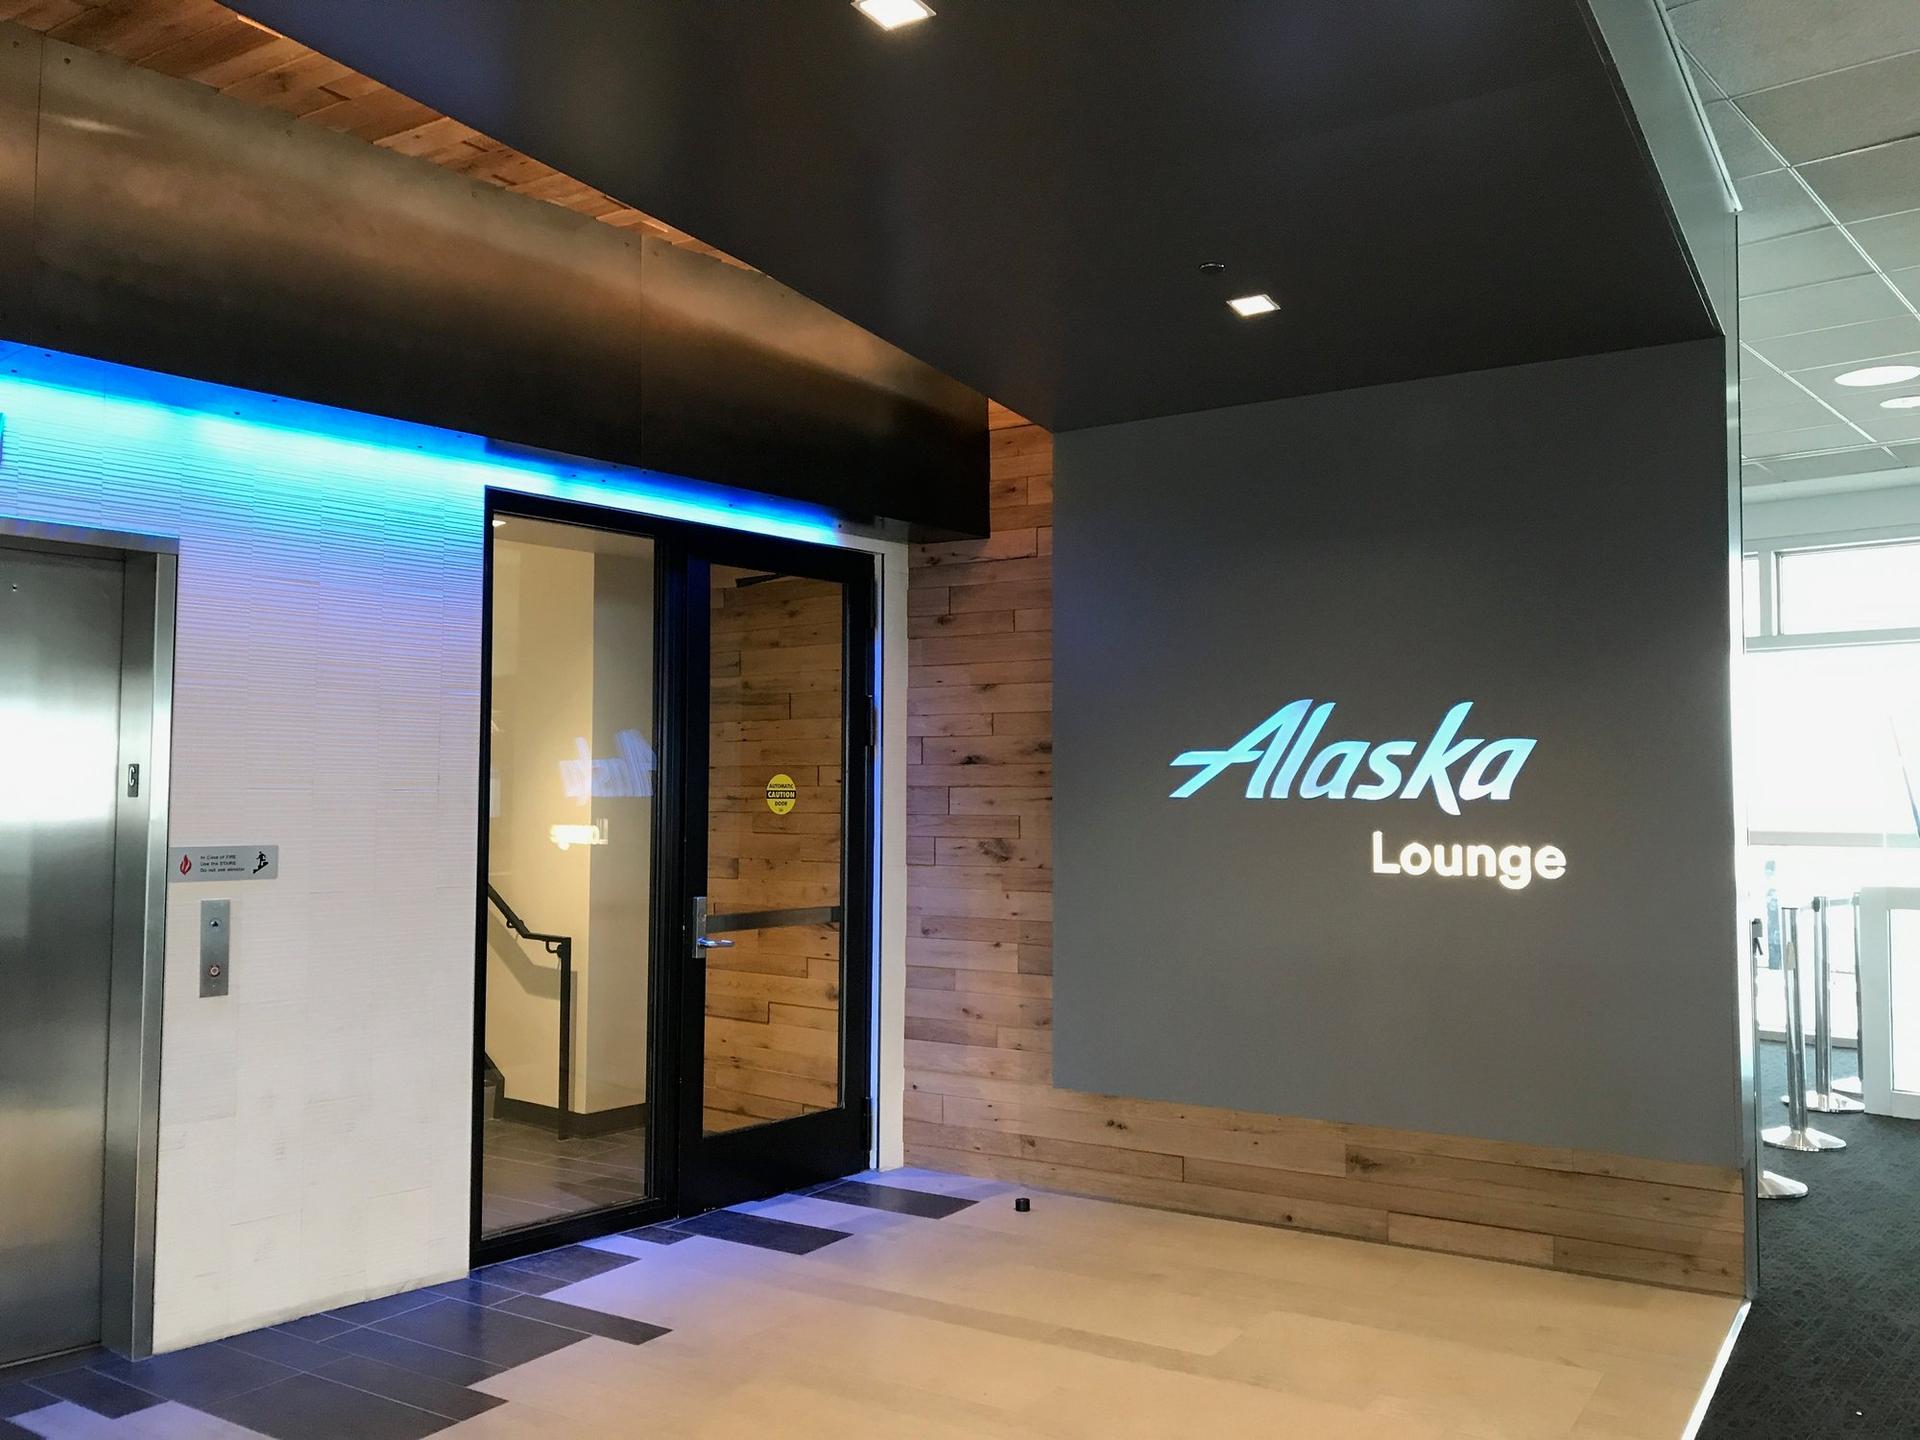 Alaska Airlines Alaska Lounge image 29 of 36